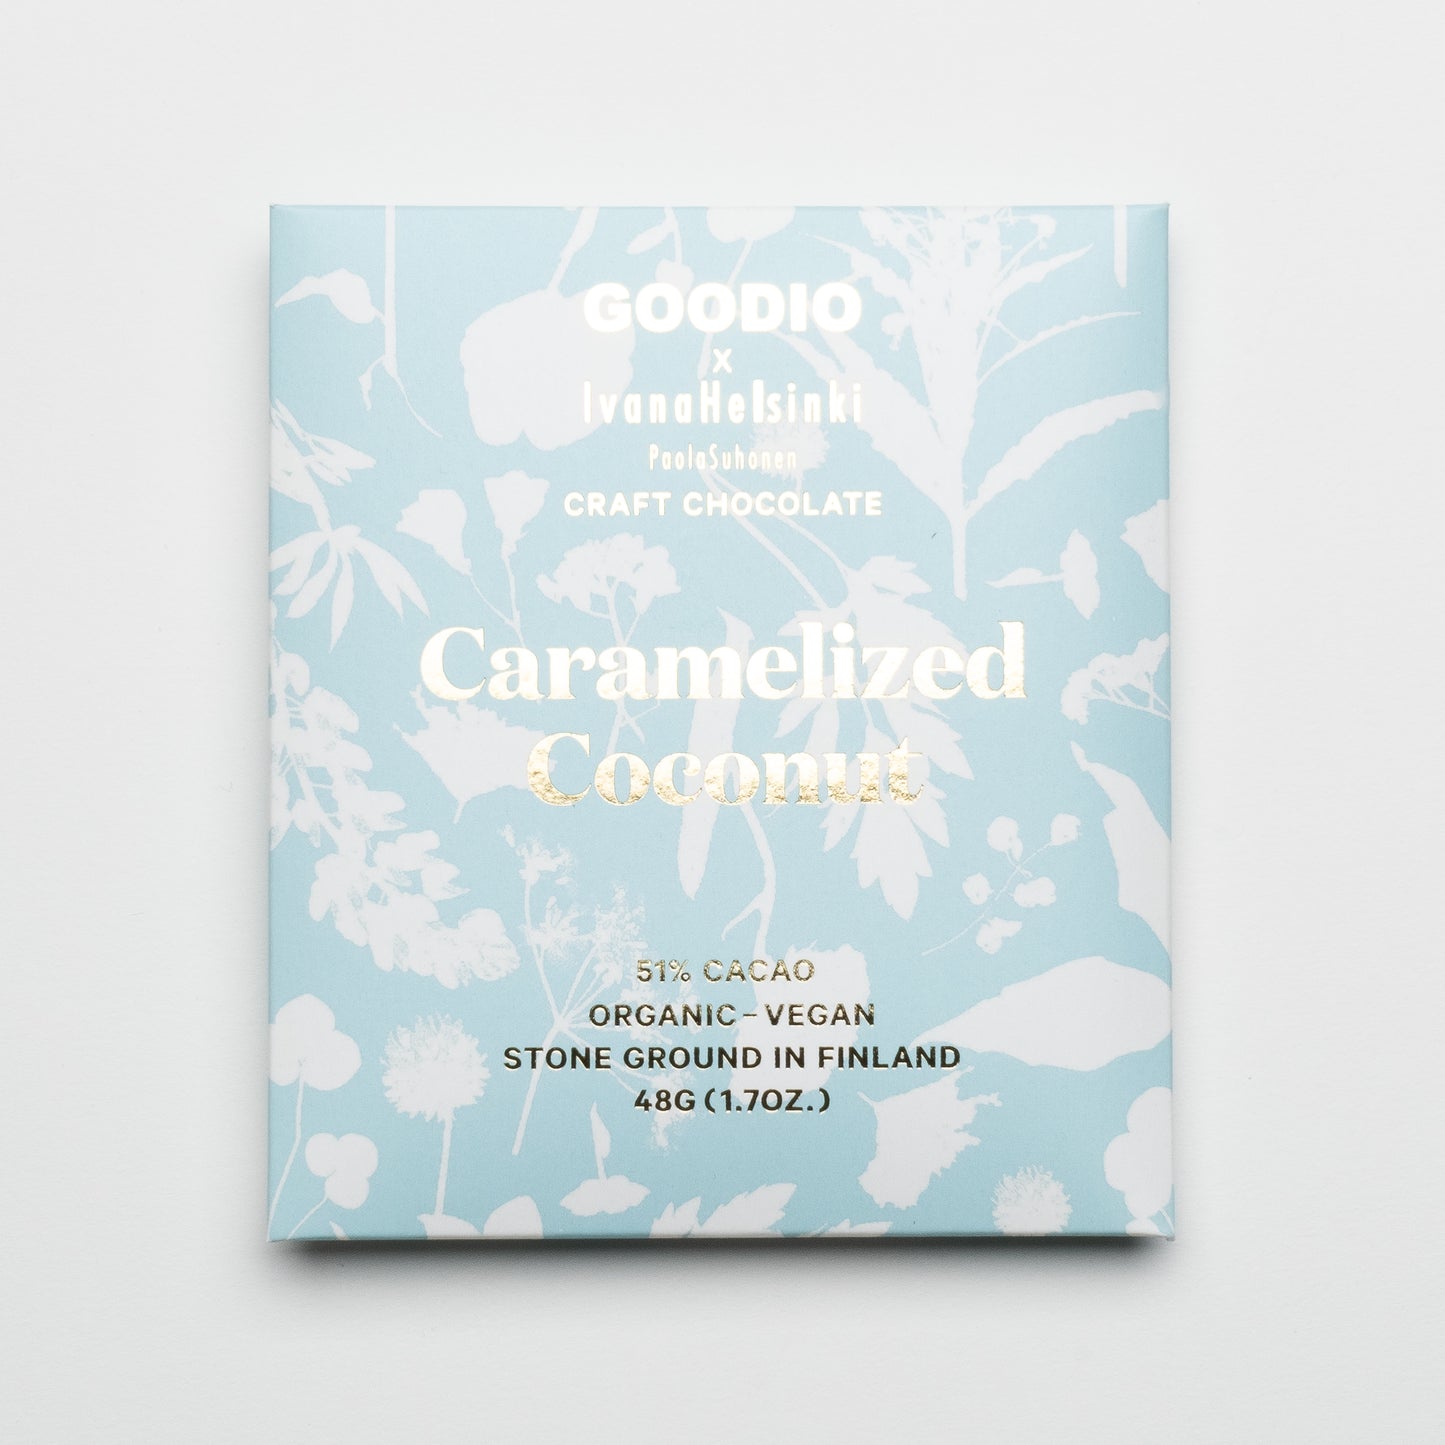 Goodio Caramelized Coconut Chocolate 51%